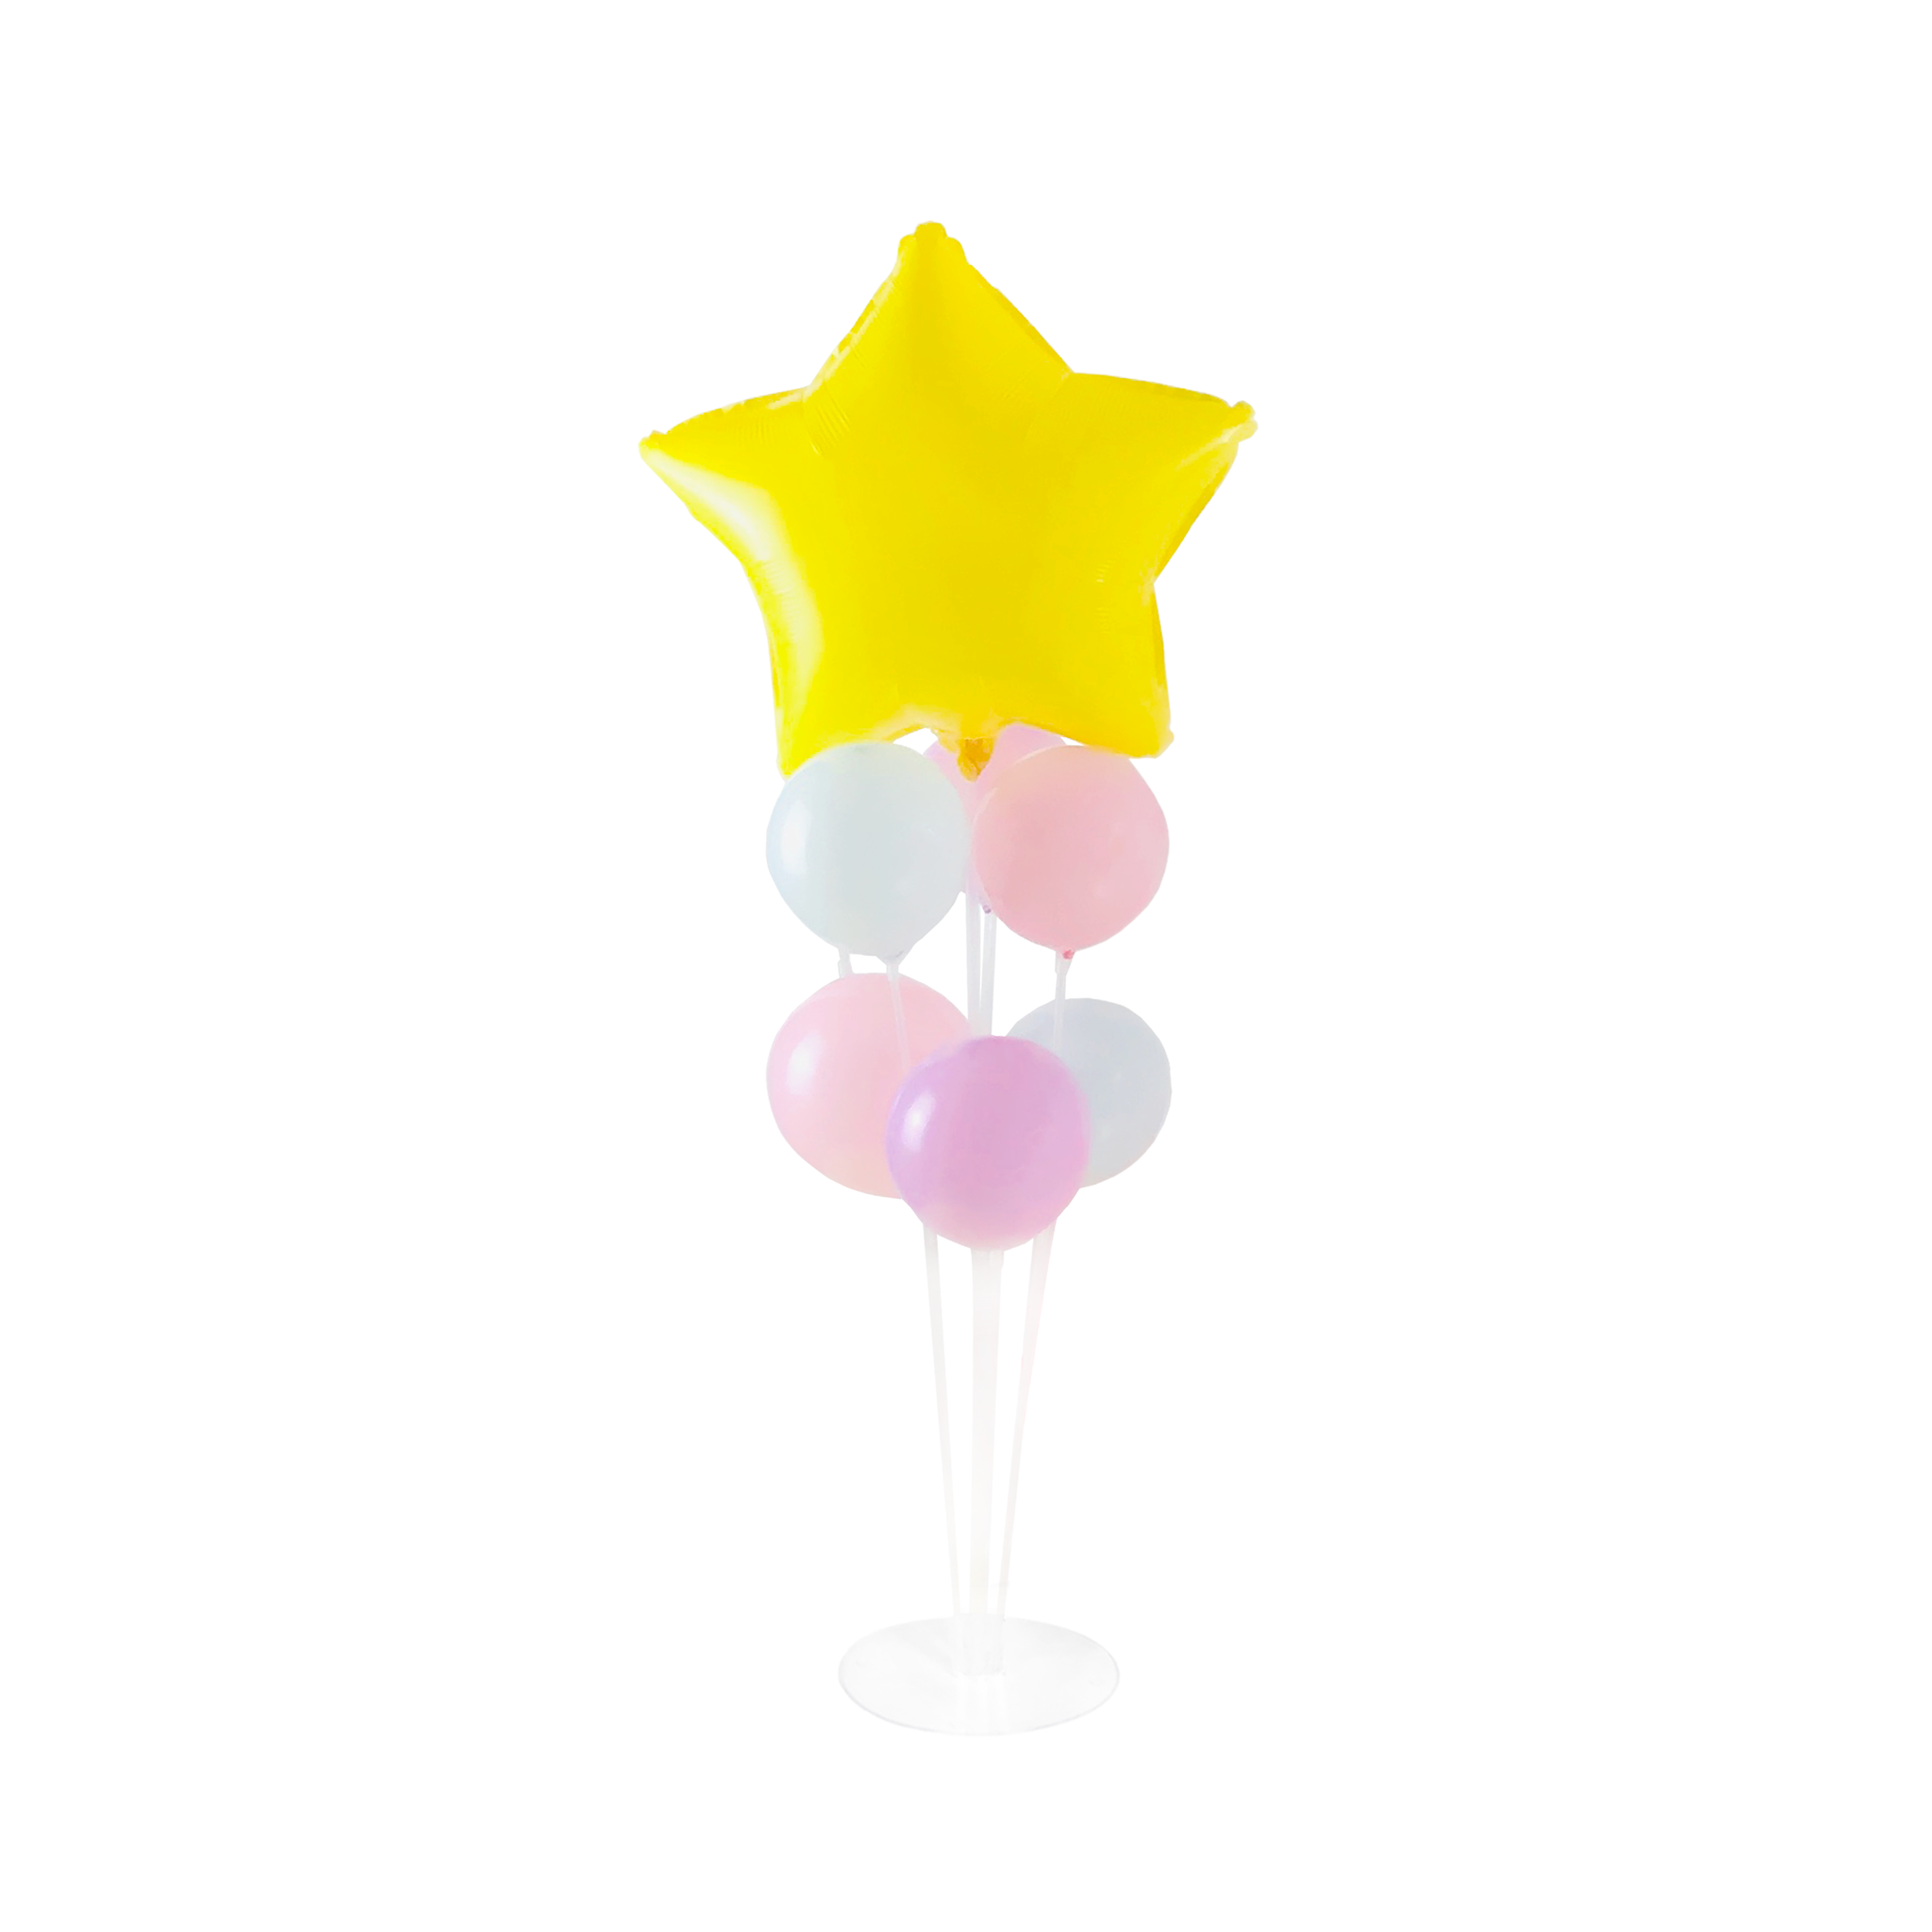 Yellow Candy Star Balloon Set